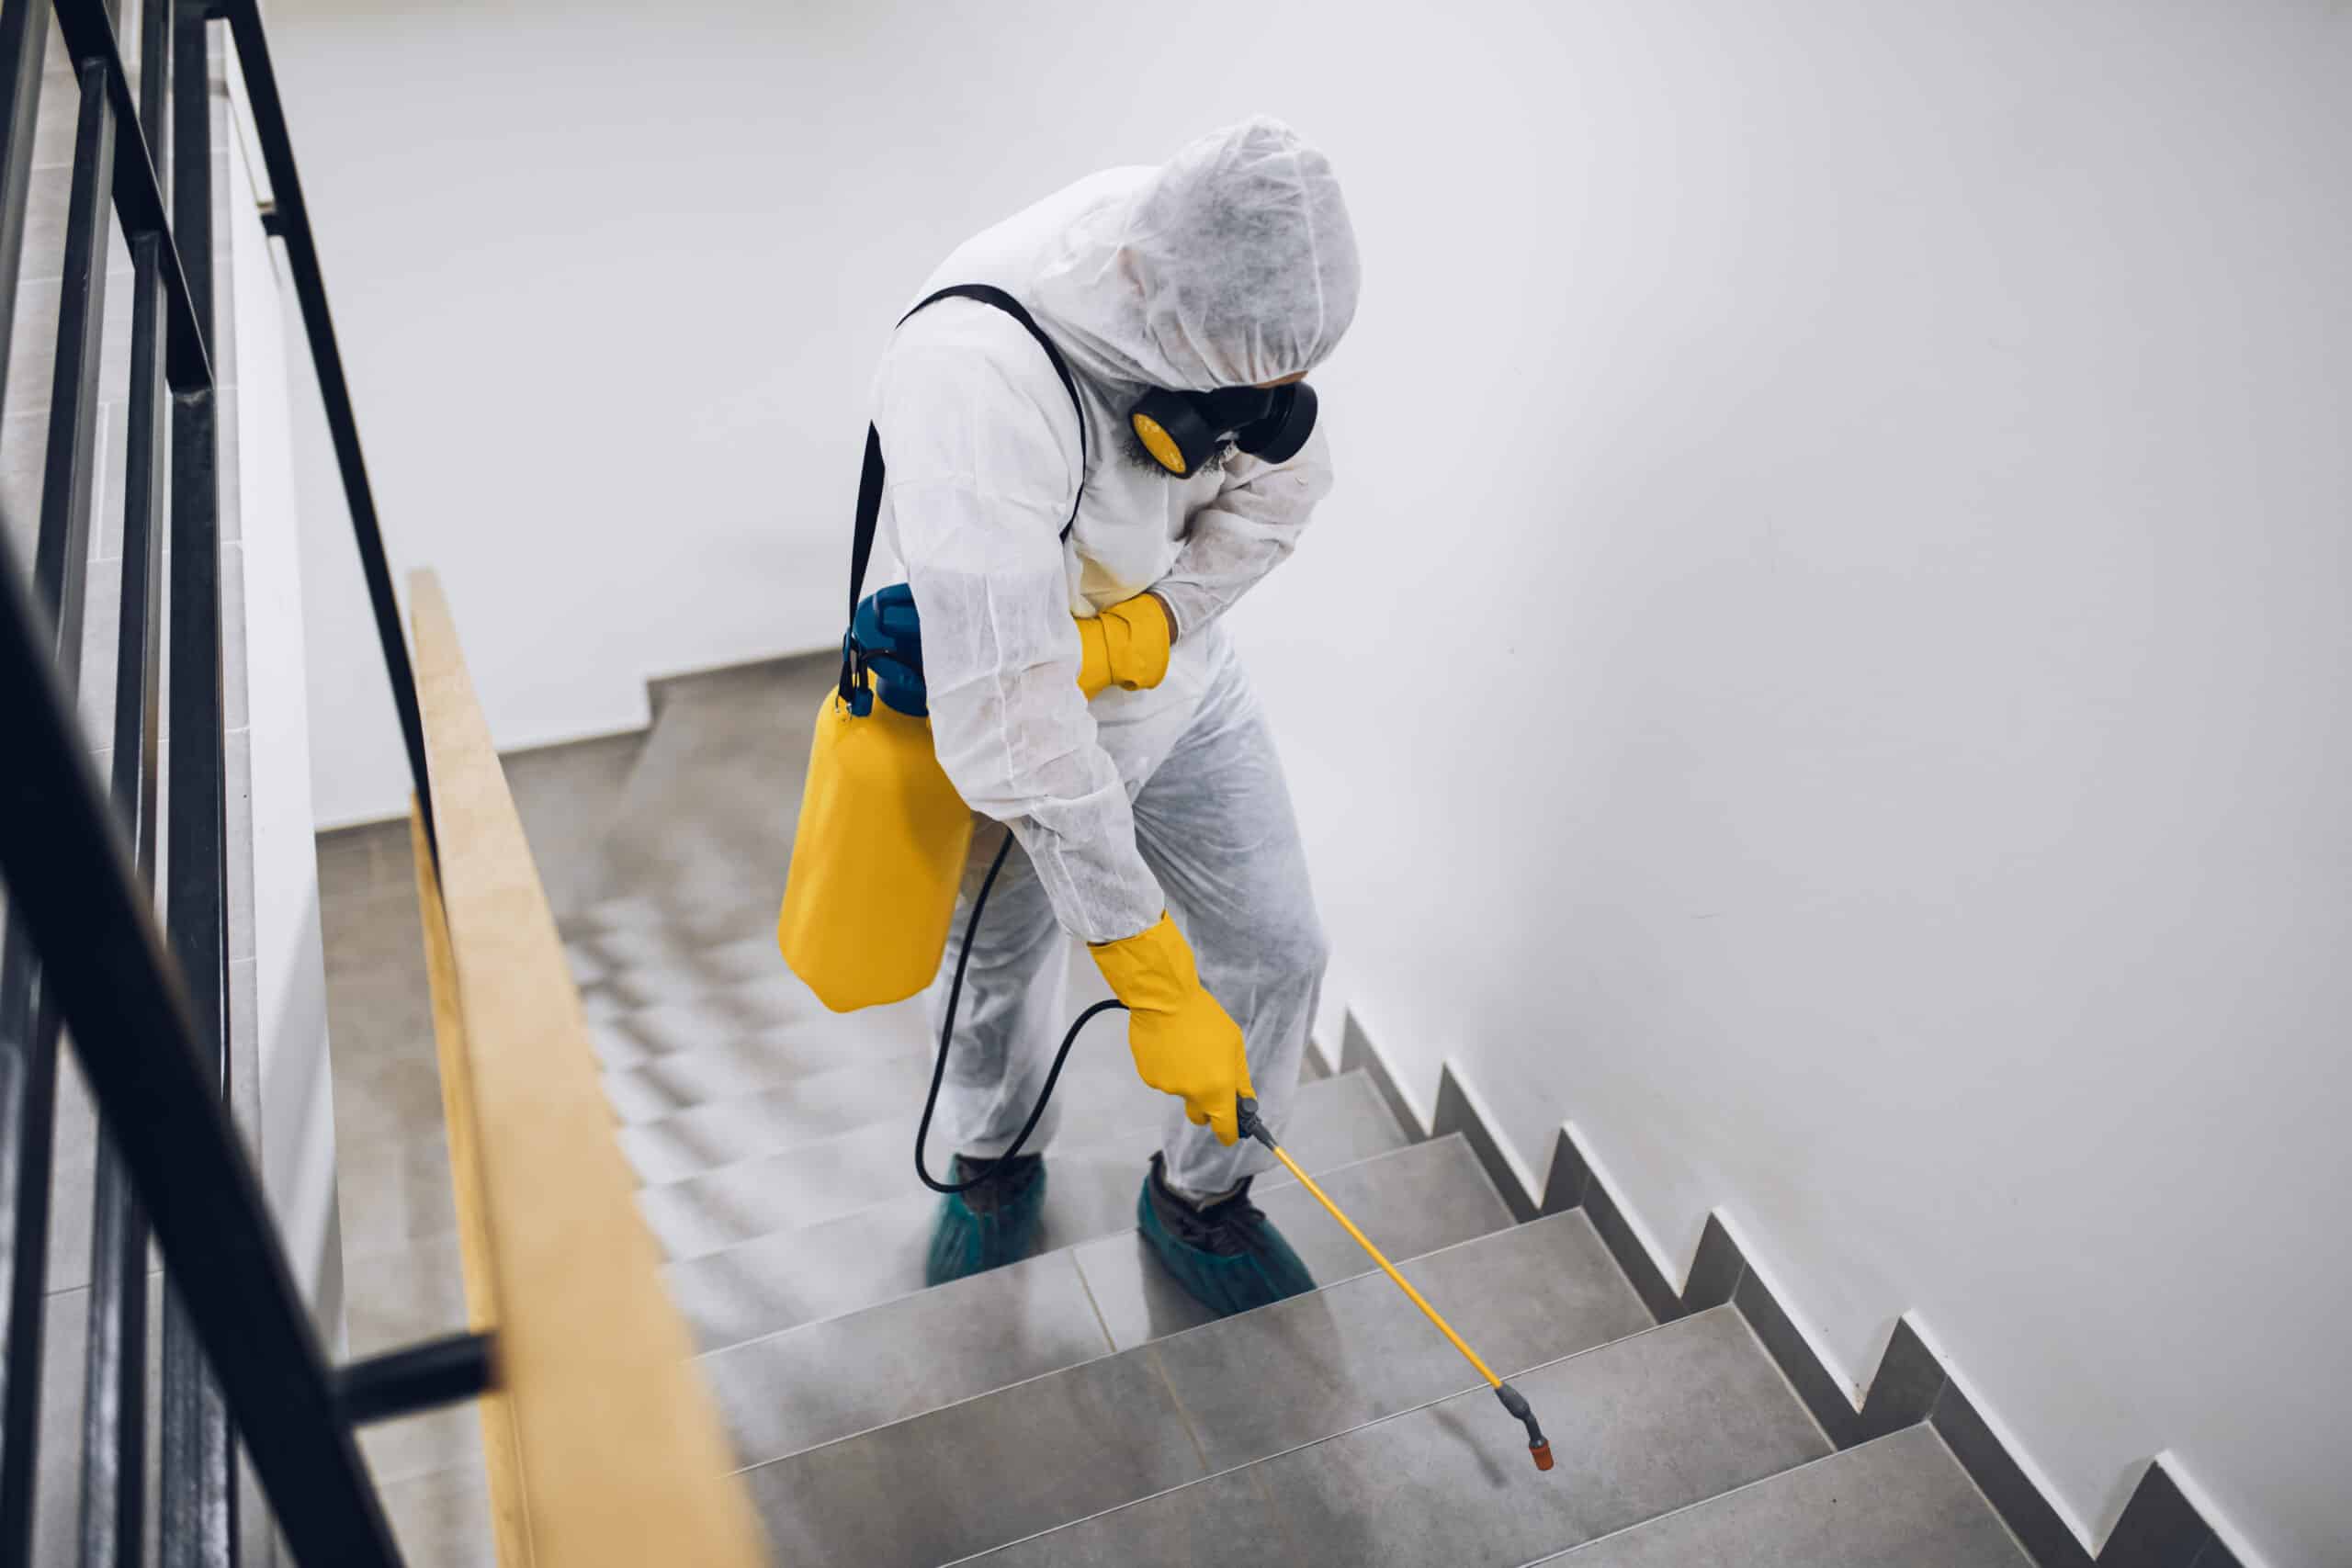 Pest Control exterminator, in work gear spraying pesticide in a stairway.